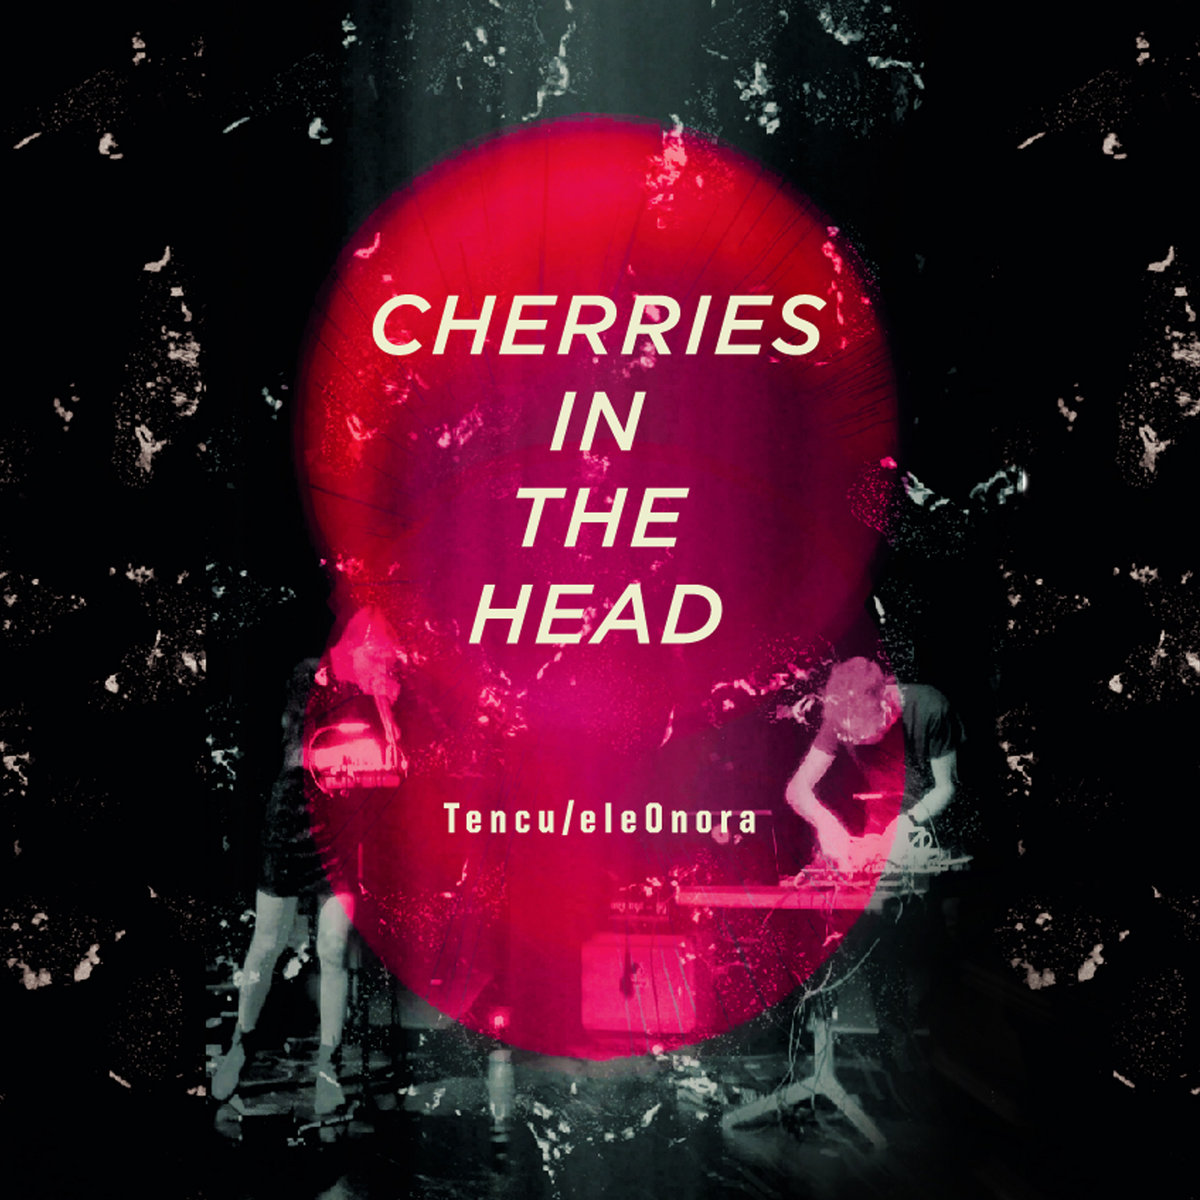 ALBUM REVIEW: Cherries in the Head by Tencu/eleOnora